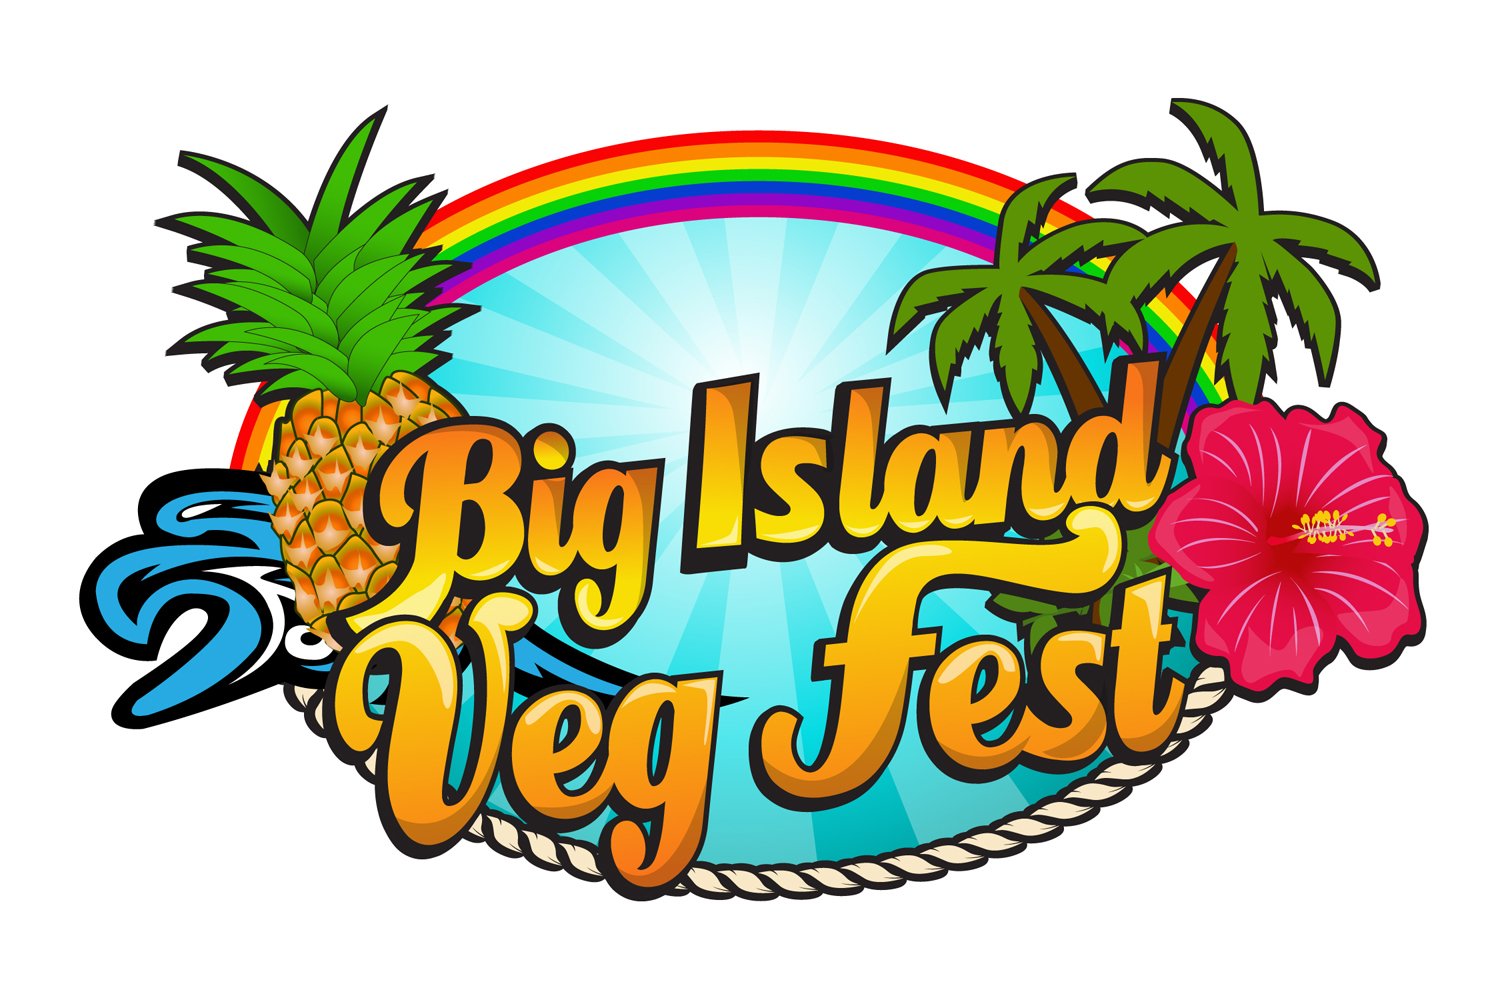 Big Island VegFest